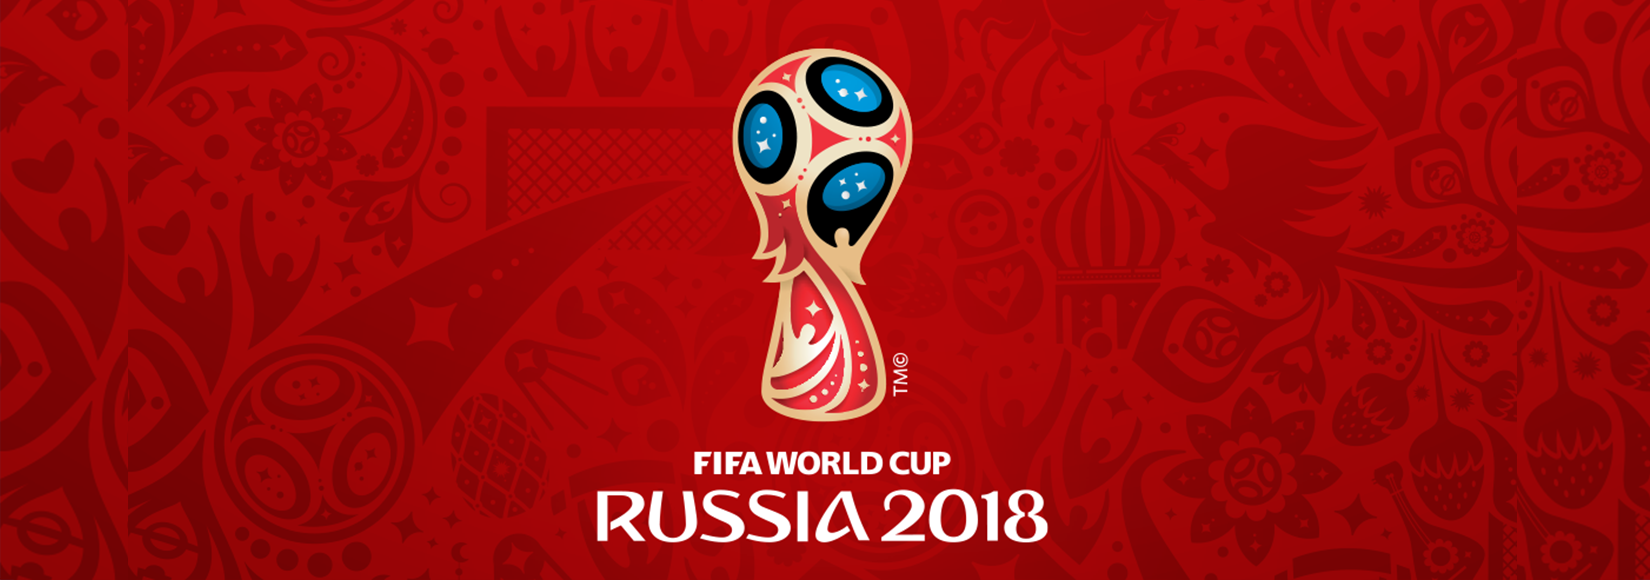 logo 2018 FIFA World Cup Russia banner 1650x580